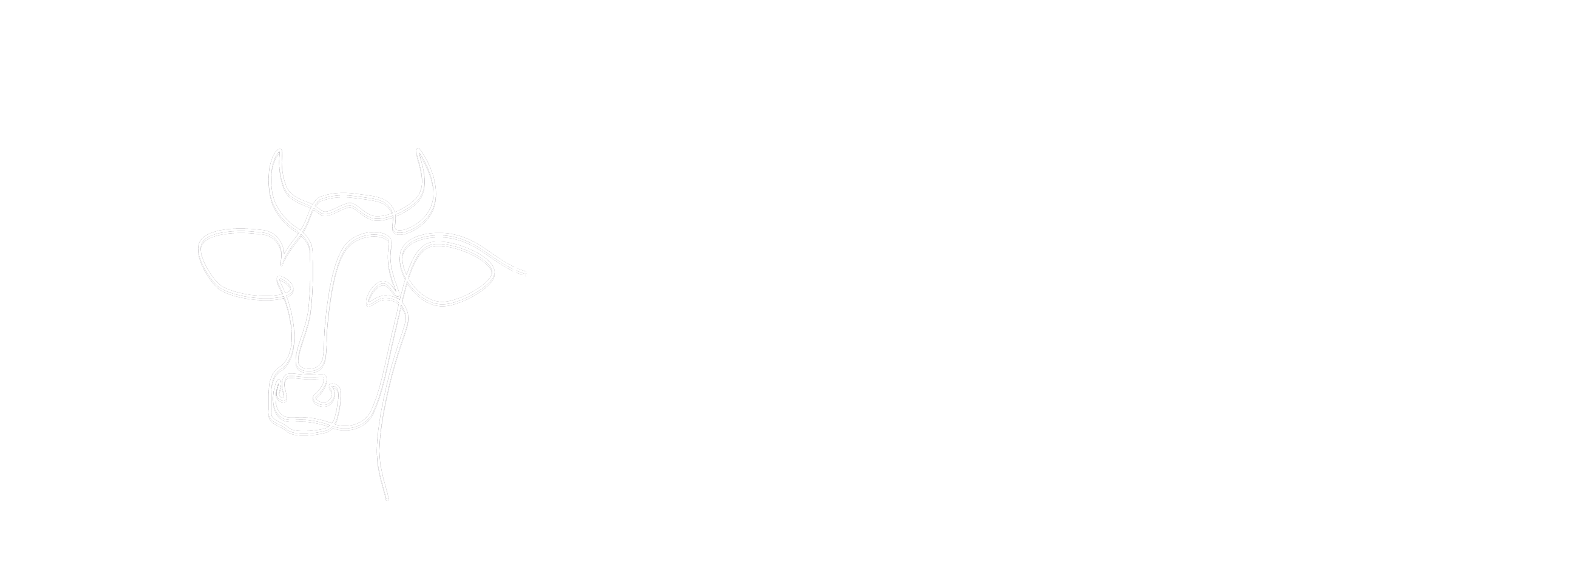 Meike Böhm Tierkommunikation